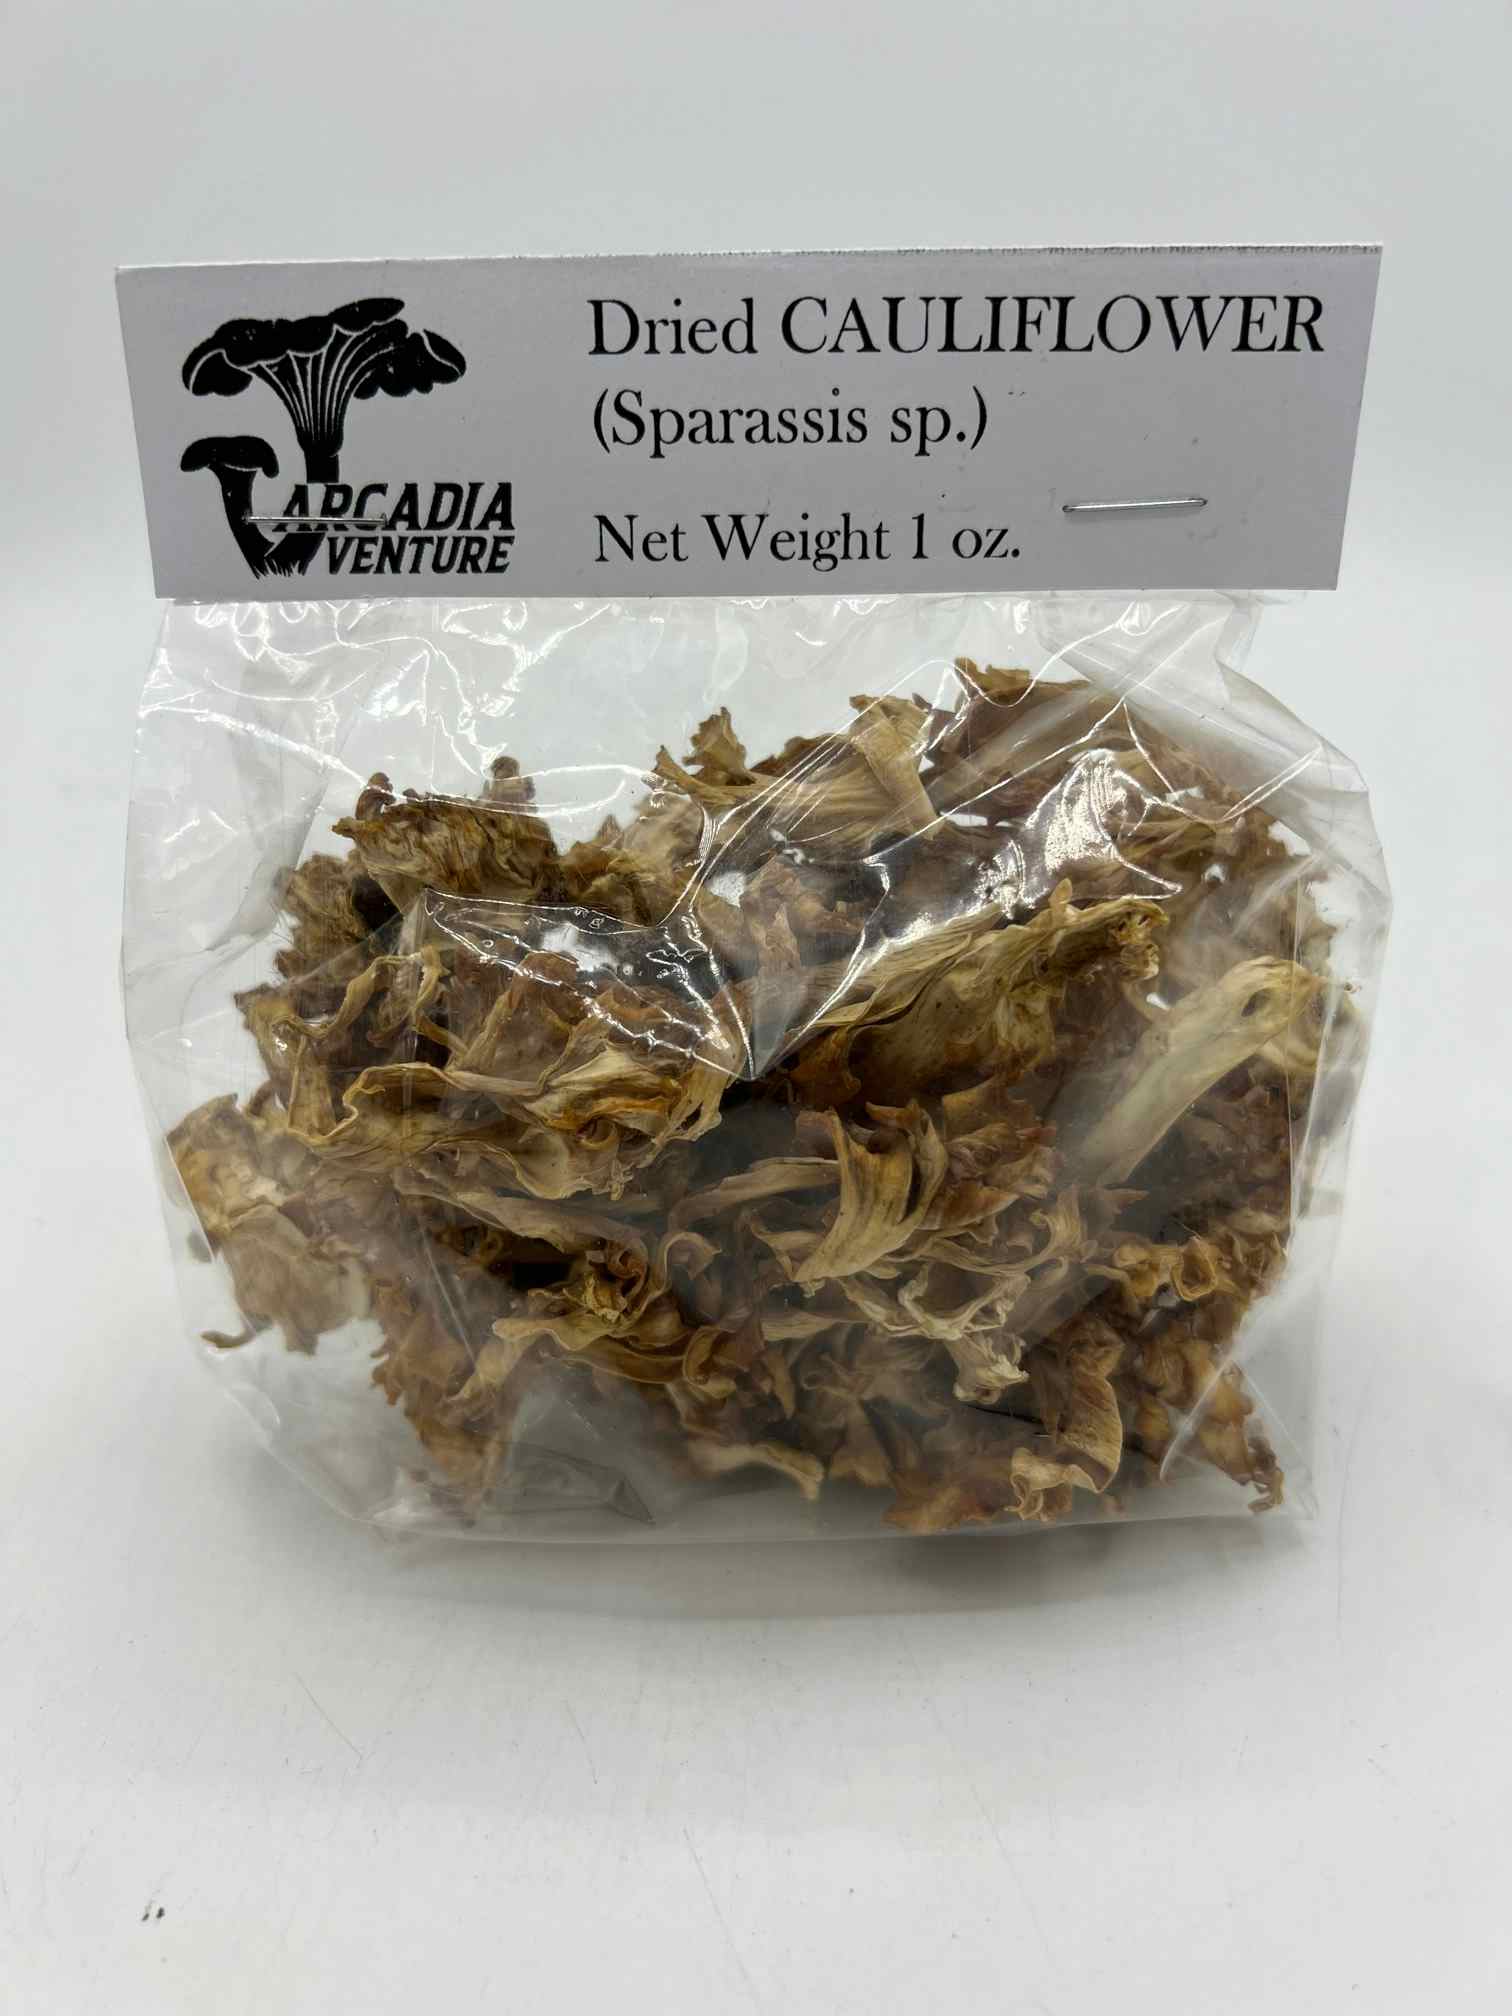 Dried Cauliflower Mushroom, 1 oz.